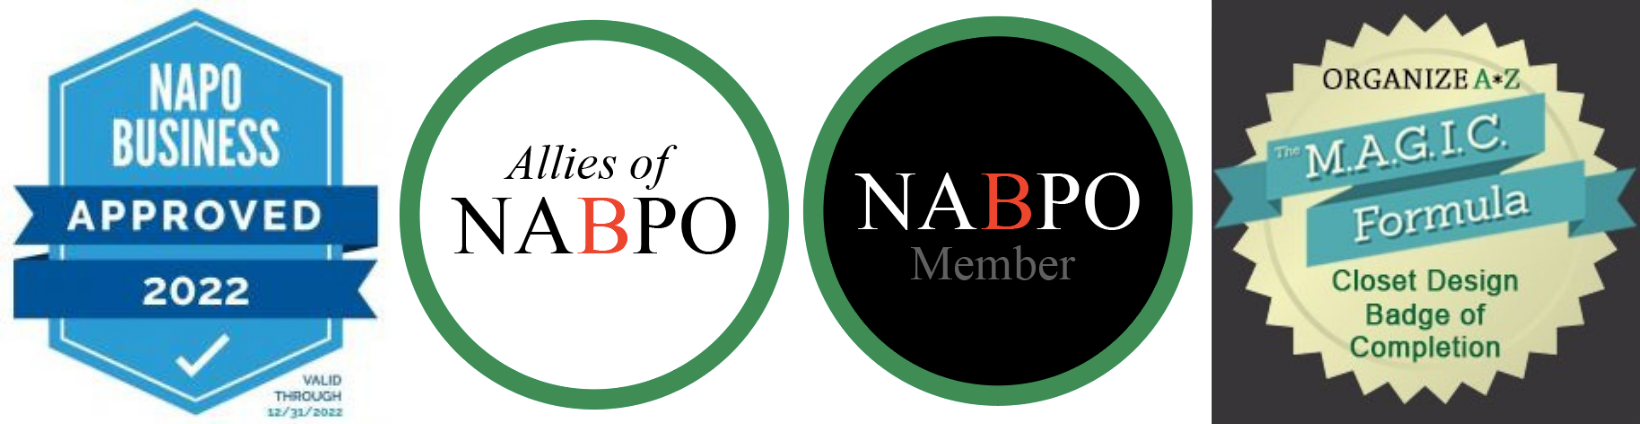 Professional Affiliations, NAPO, NABPO, MAGIC Formula Closet Design